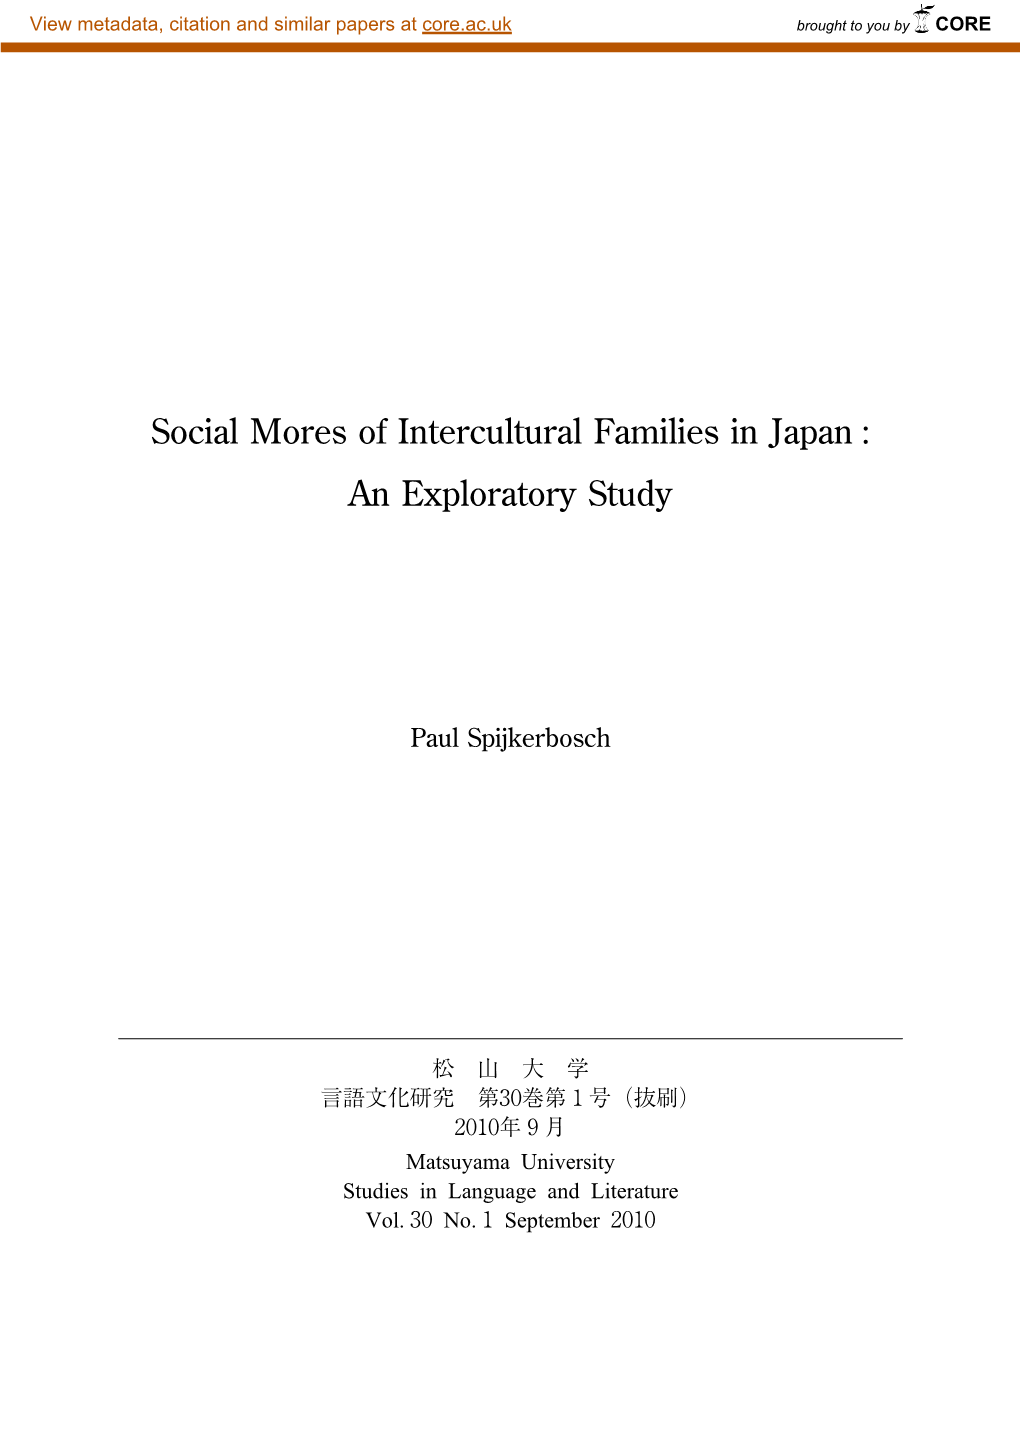 Social Mores of Intercultural Families in Japan : an Exploratory Study